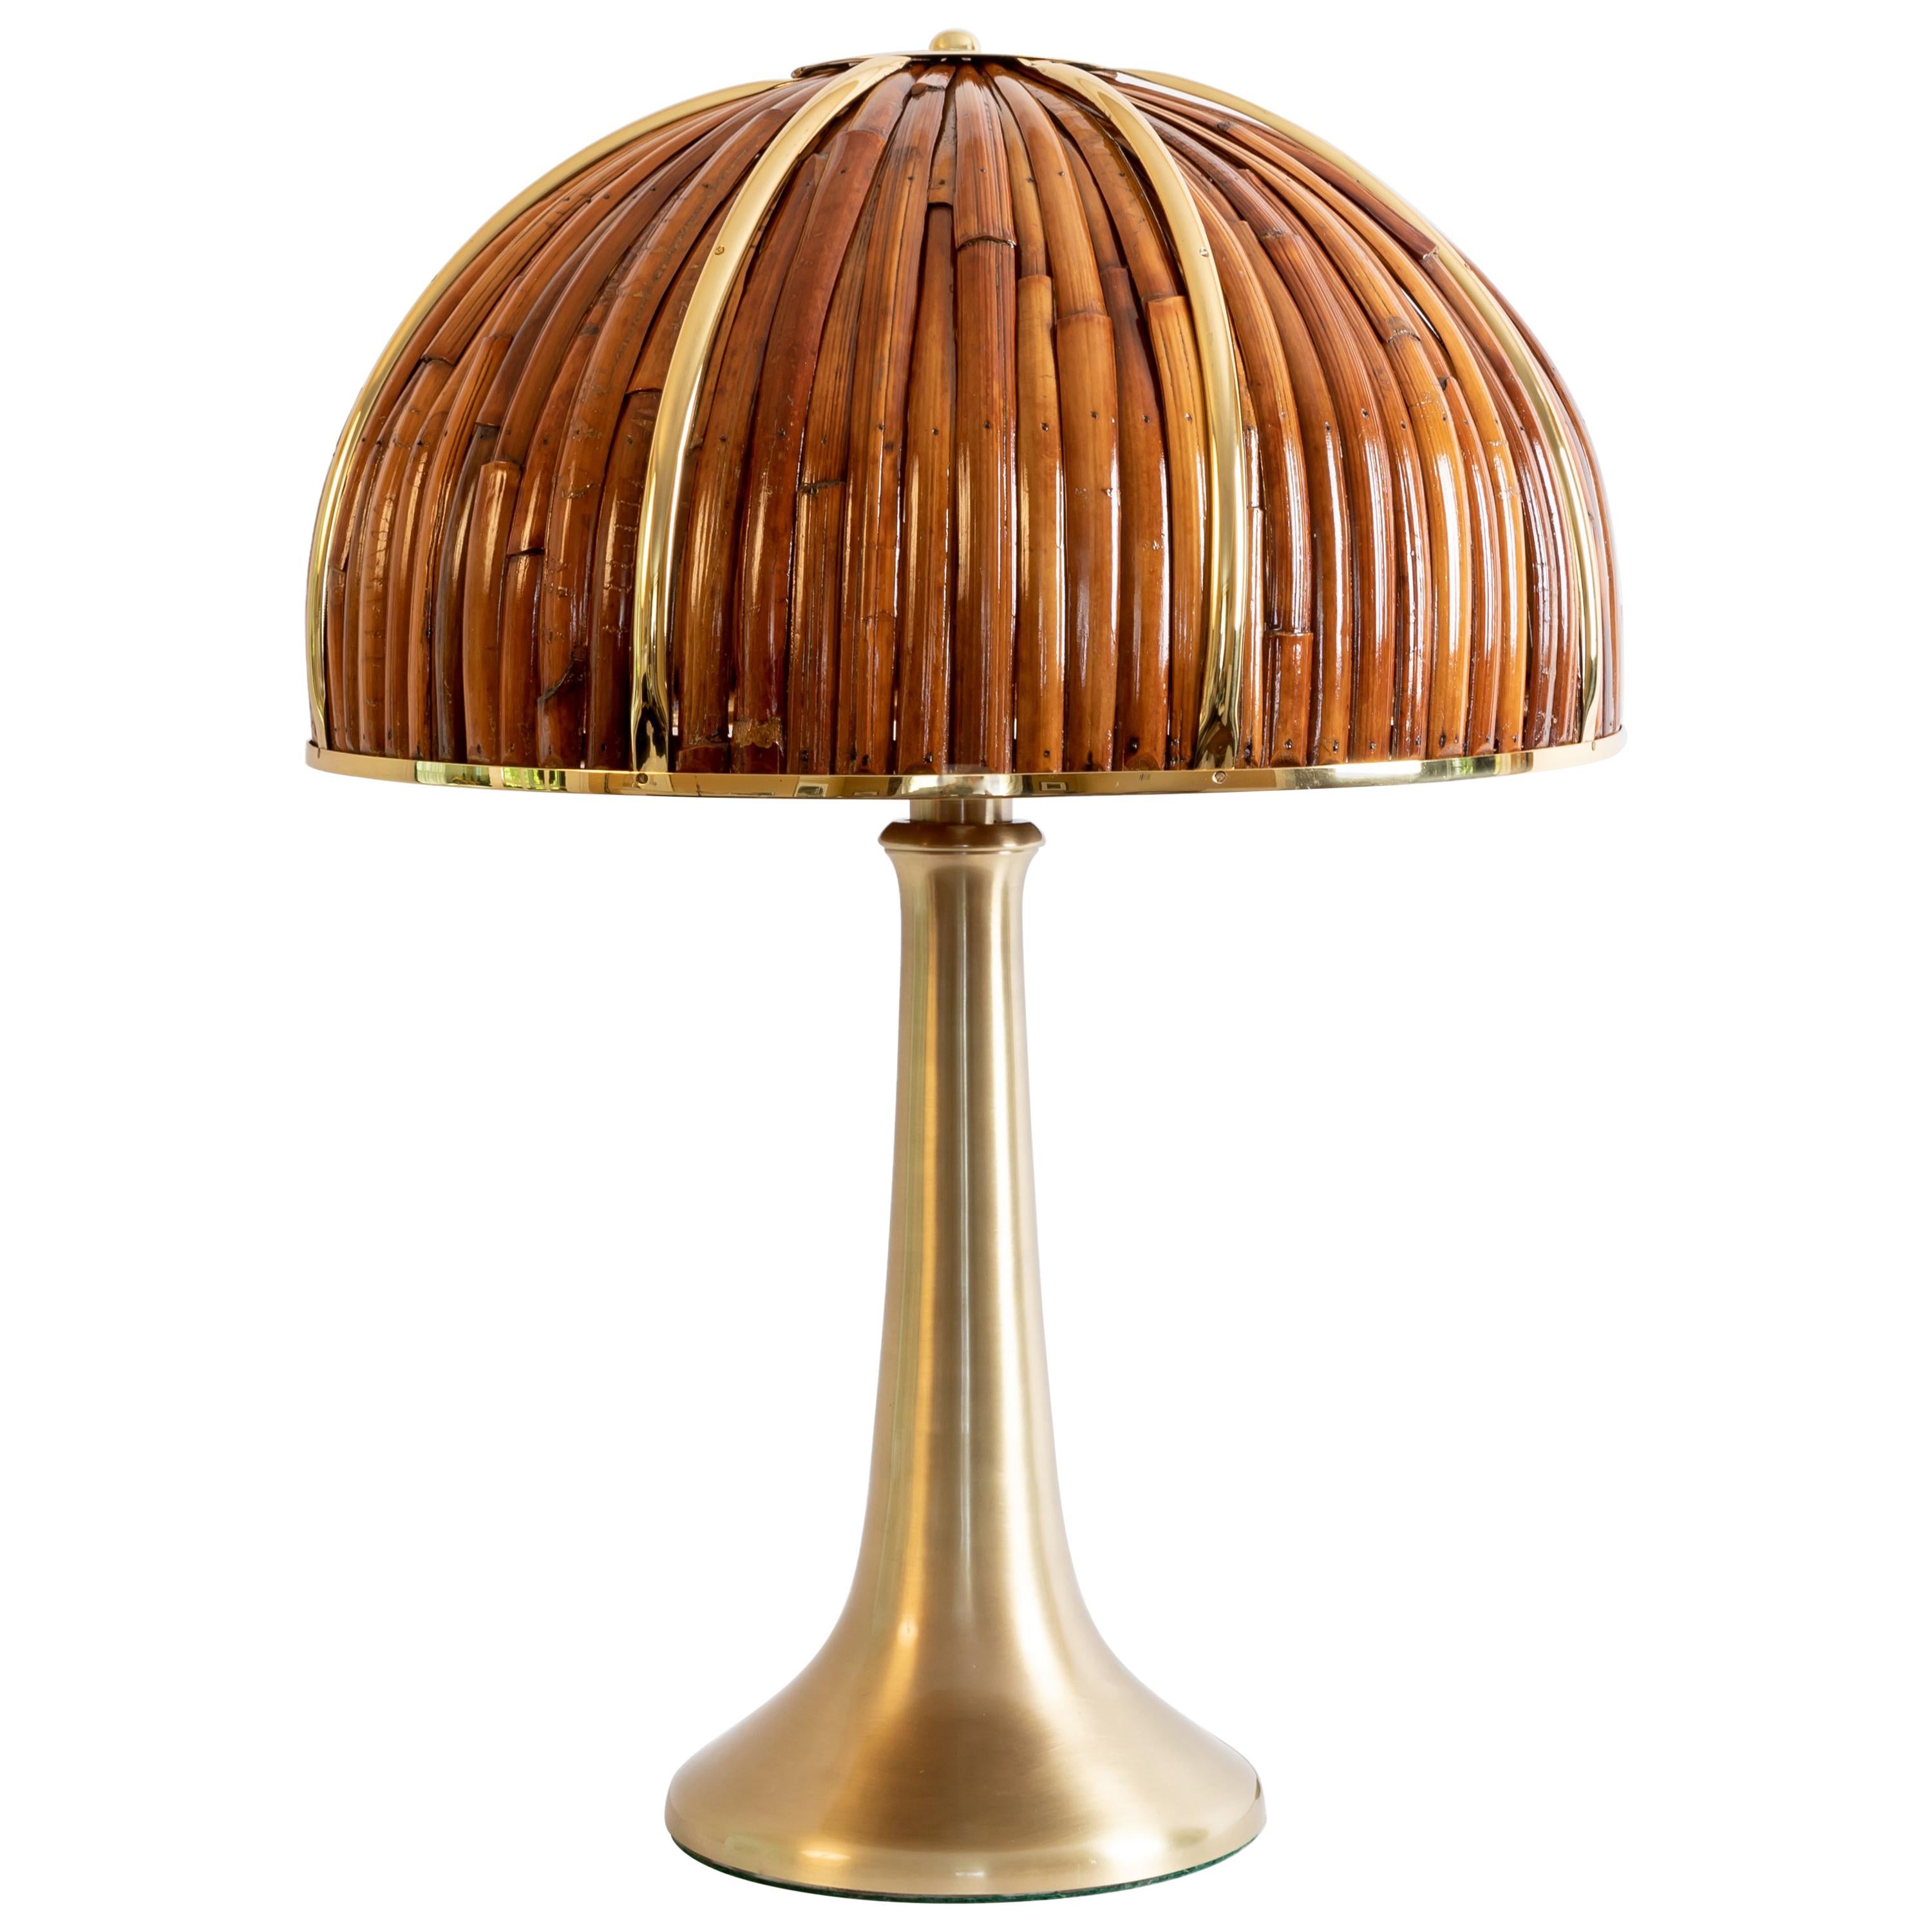 Gabriella Crespi Large 'Fungo' Table Lamp